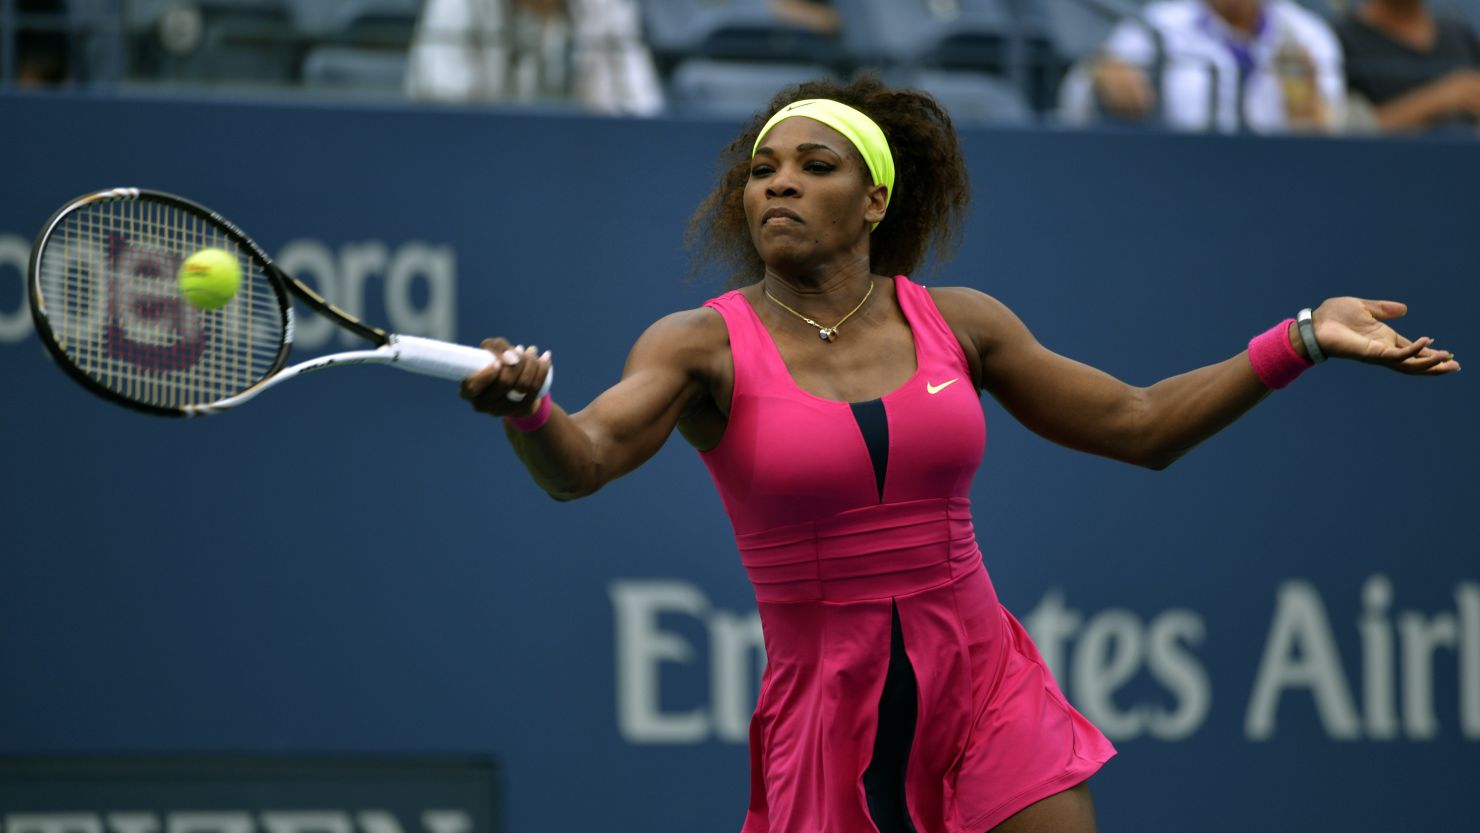 Serena Williams is seeking a 15th Grand Slam singles title at Flushing Meadows